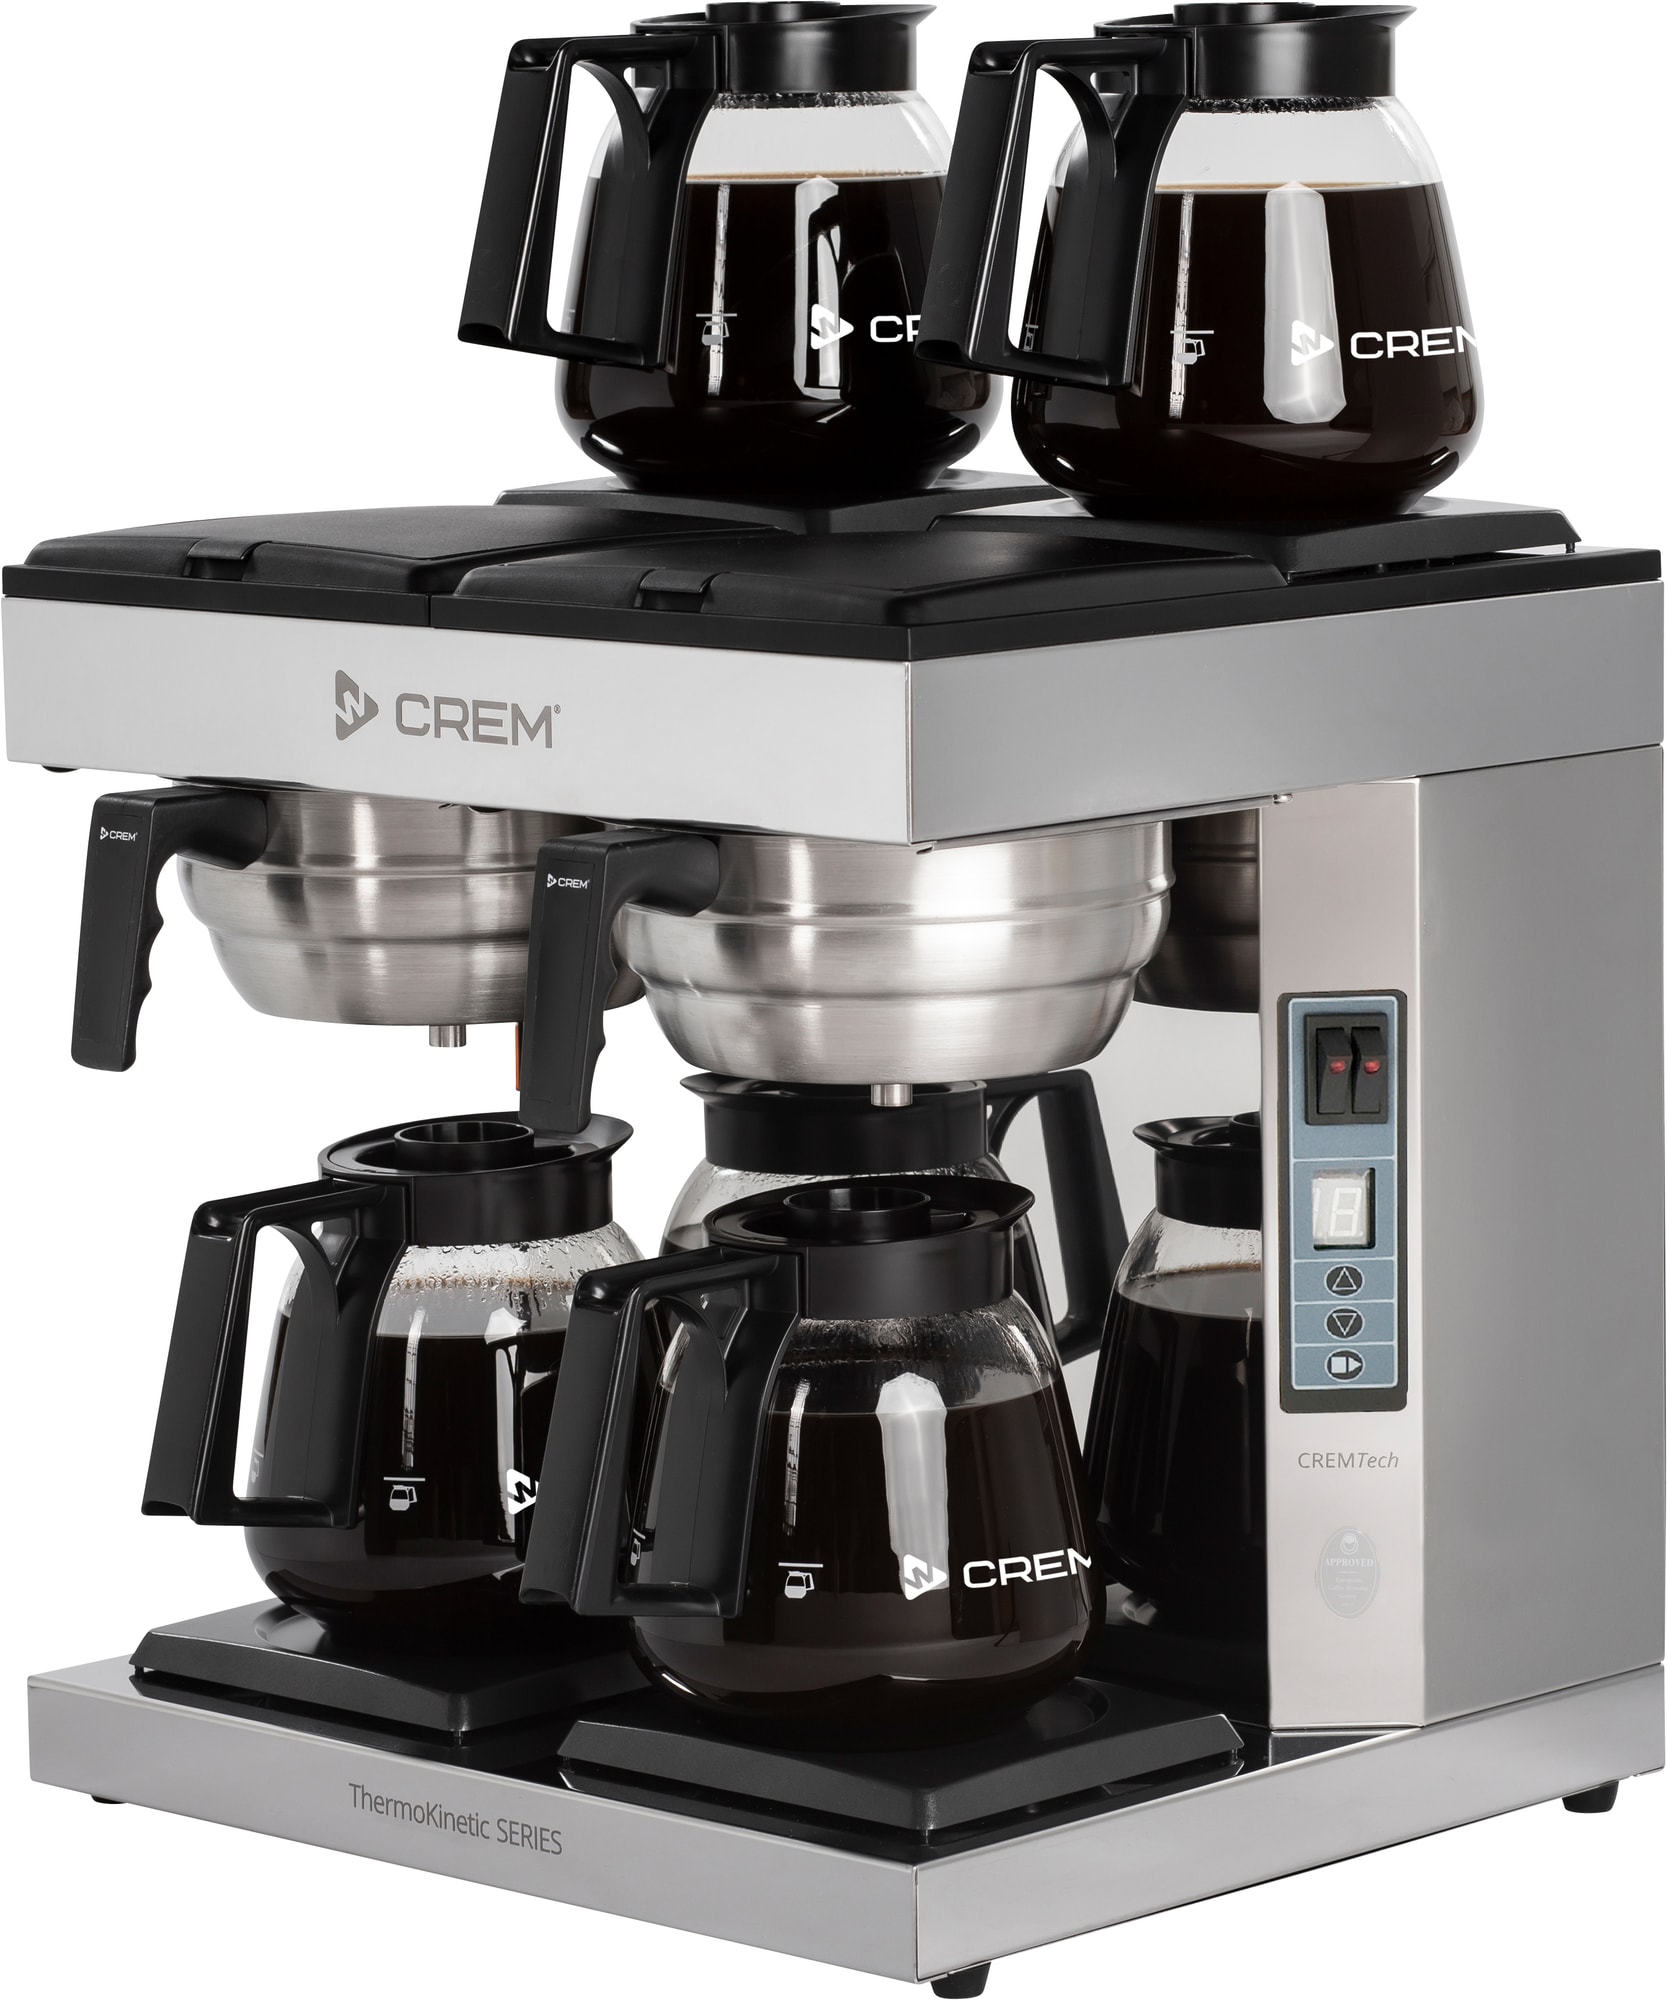 Crem ThermoKinetic DA4-4 kaffemaskine | Elgiganten